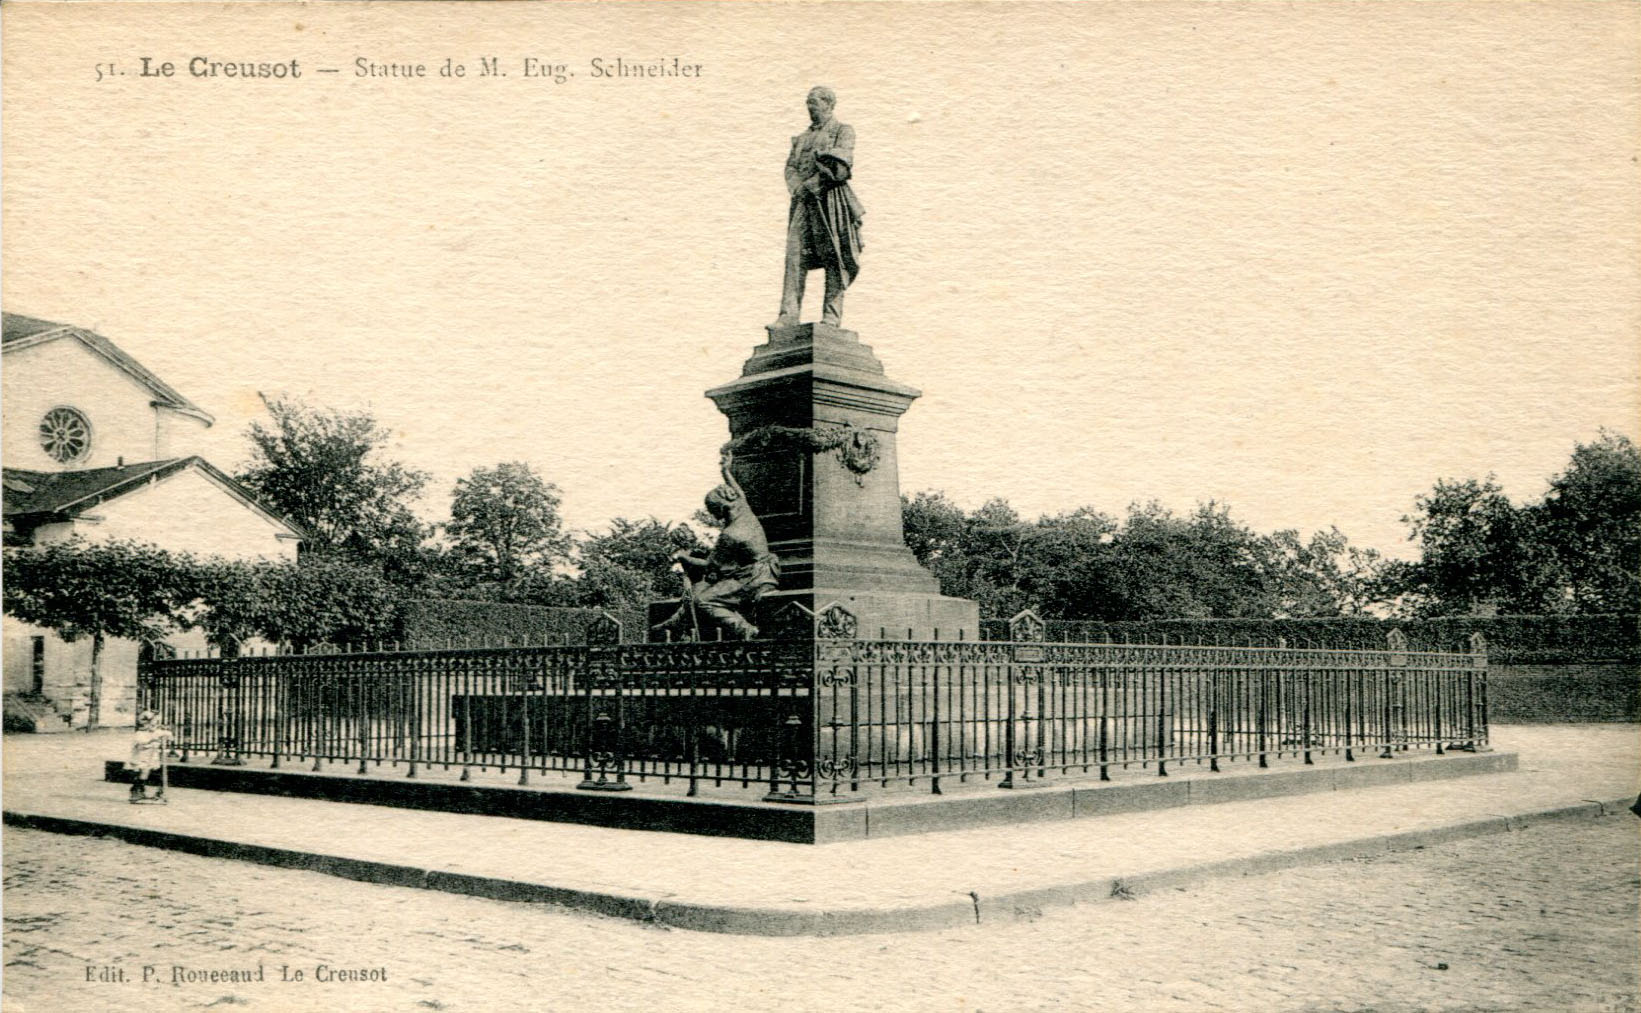 Statue Eugène Schneider